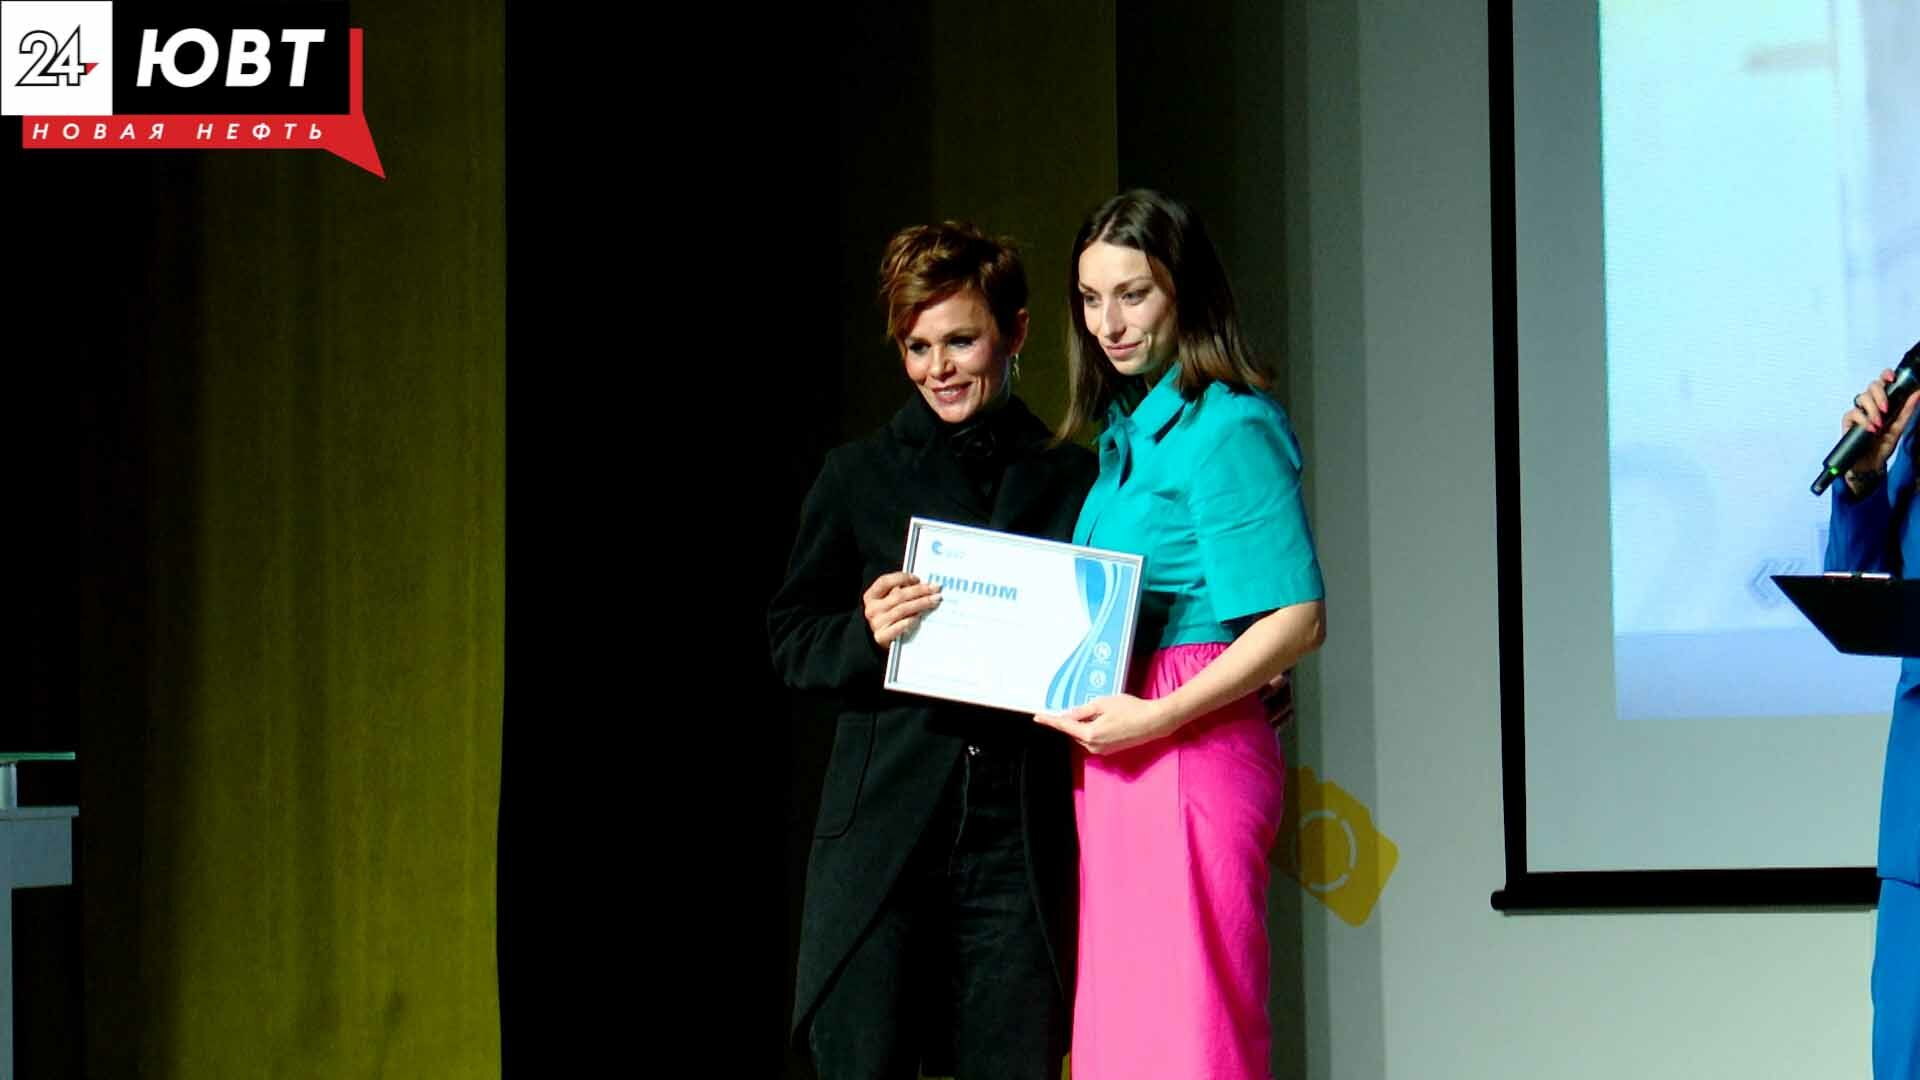 ЮВТ-24 взял награду в главной номинации фестиваля «Камский бриз»